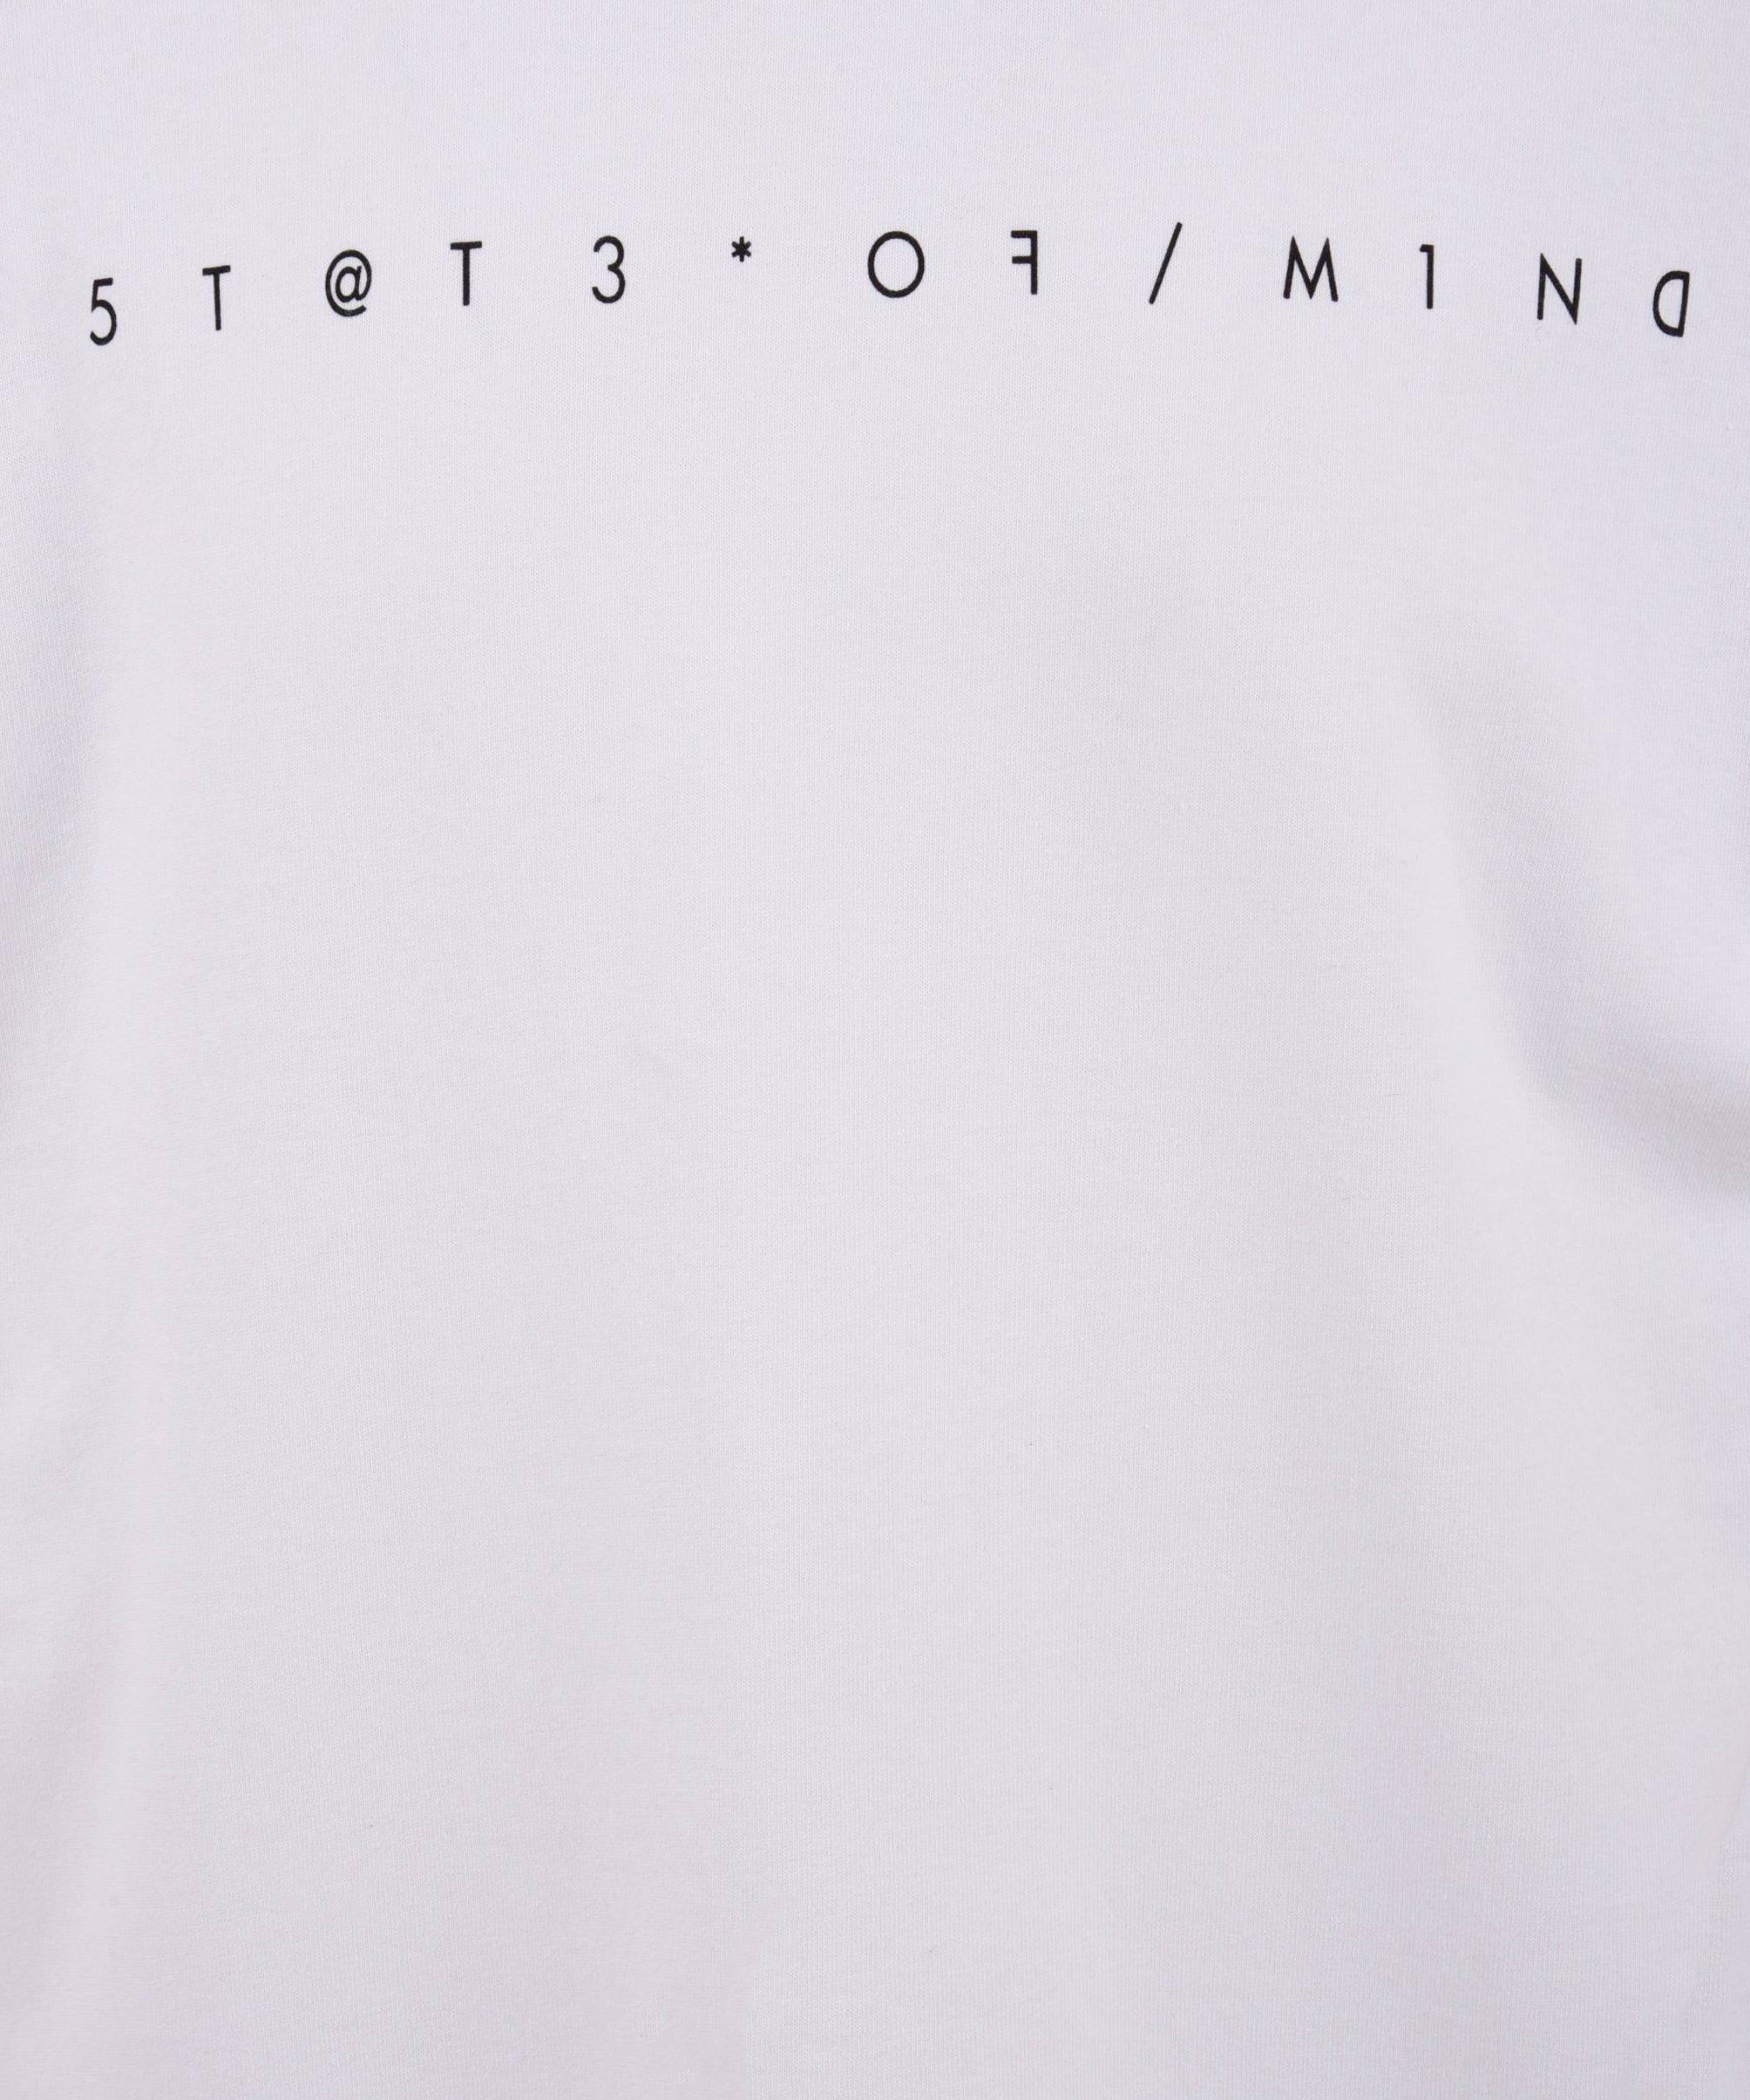 T-shirt 5TATE OF MIND Uomo TSSOM4118 Bianco